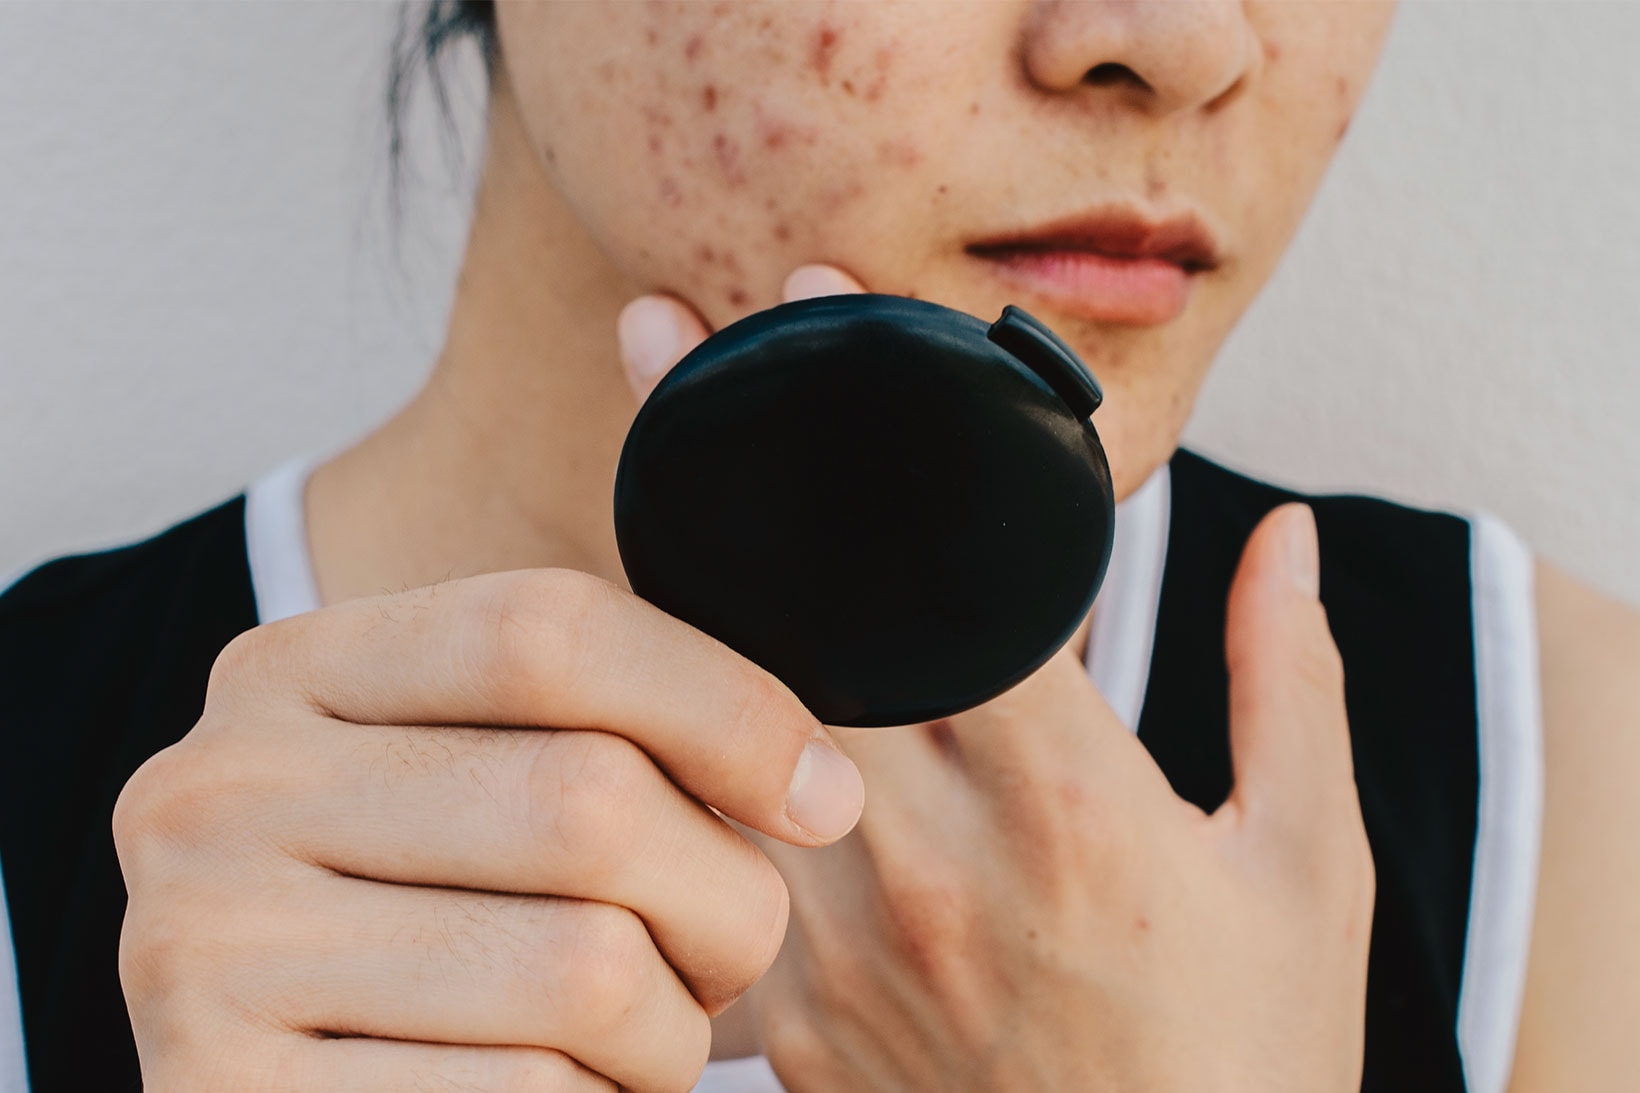 skincare acne stress anxiety wellness mental health hand mirror